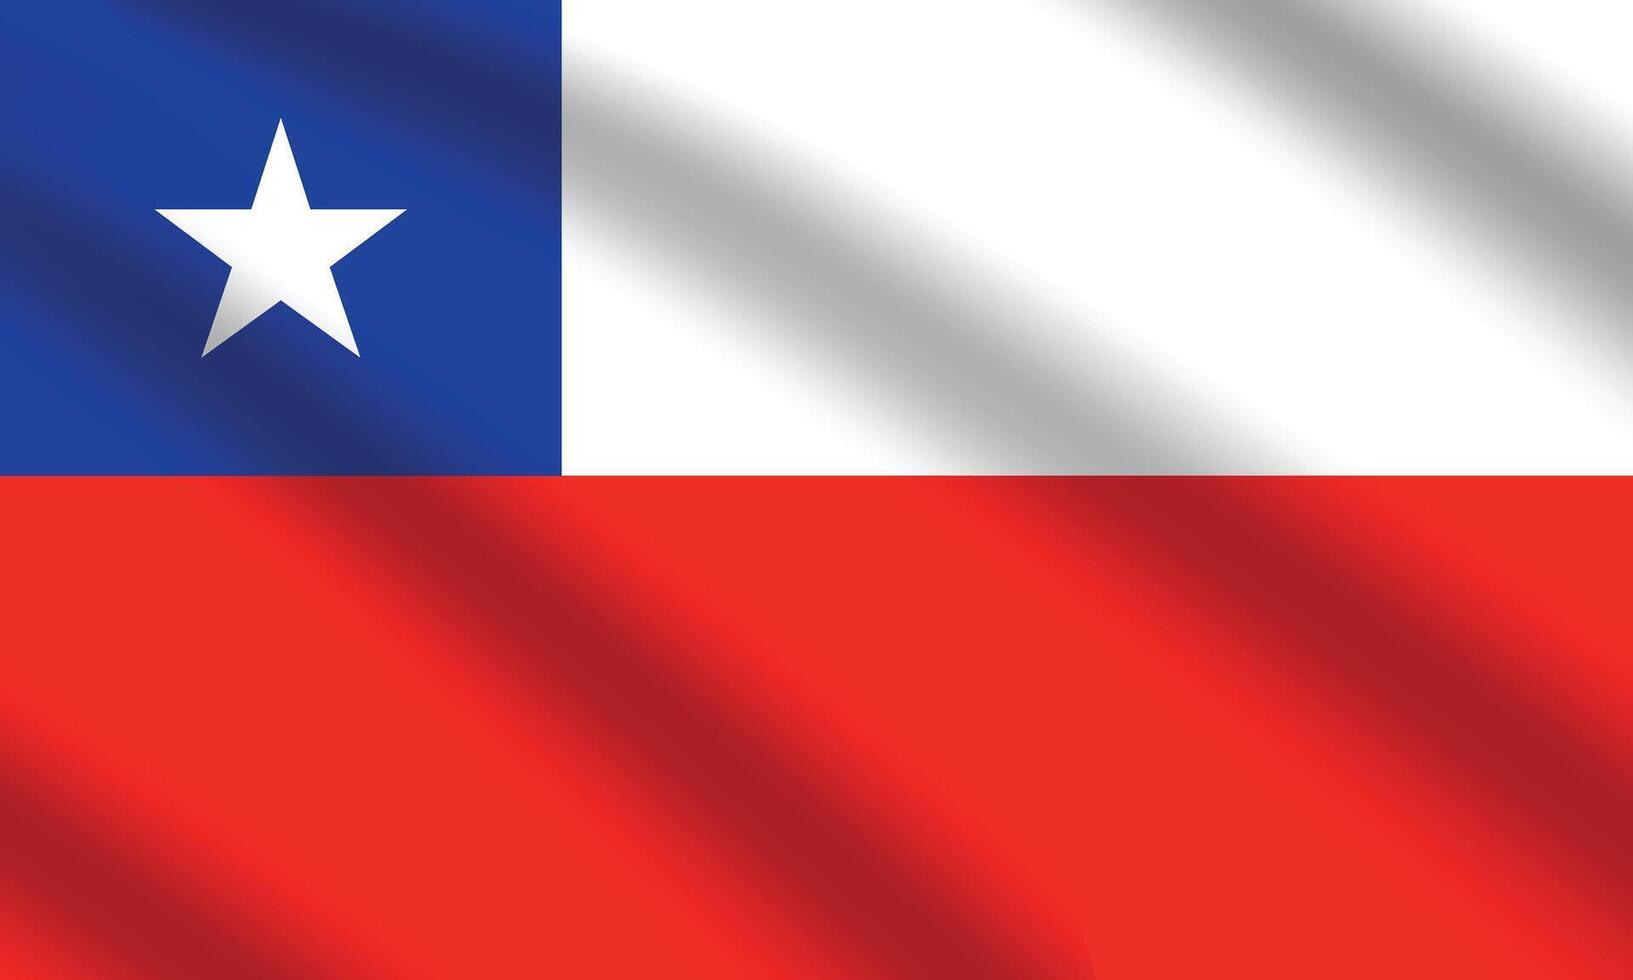 Flat Illustration of Chile flag. Chile national flag design. Chile wave flag. vector